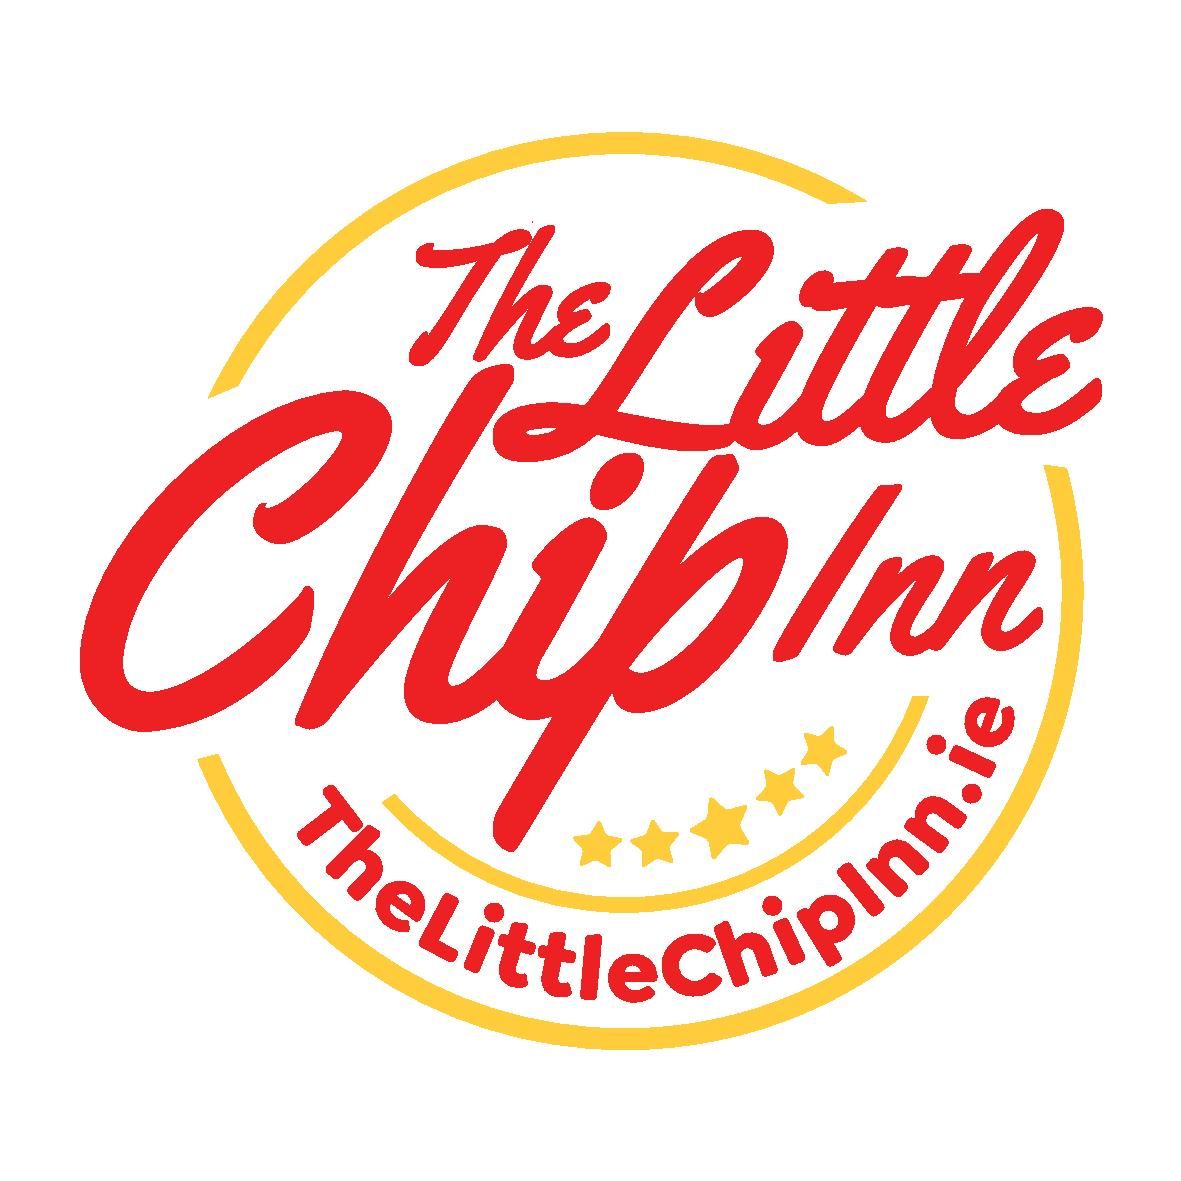 The Little Chip Inn